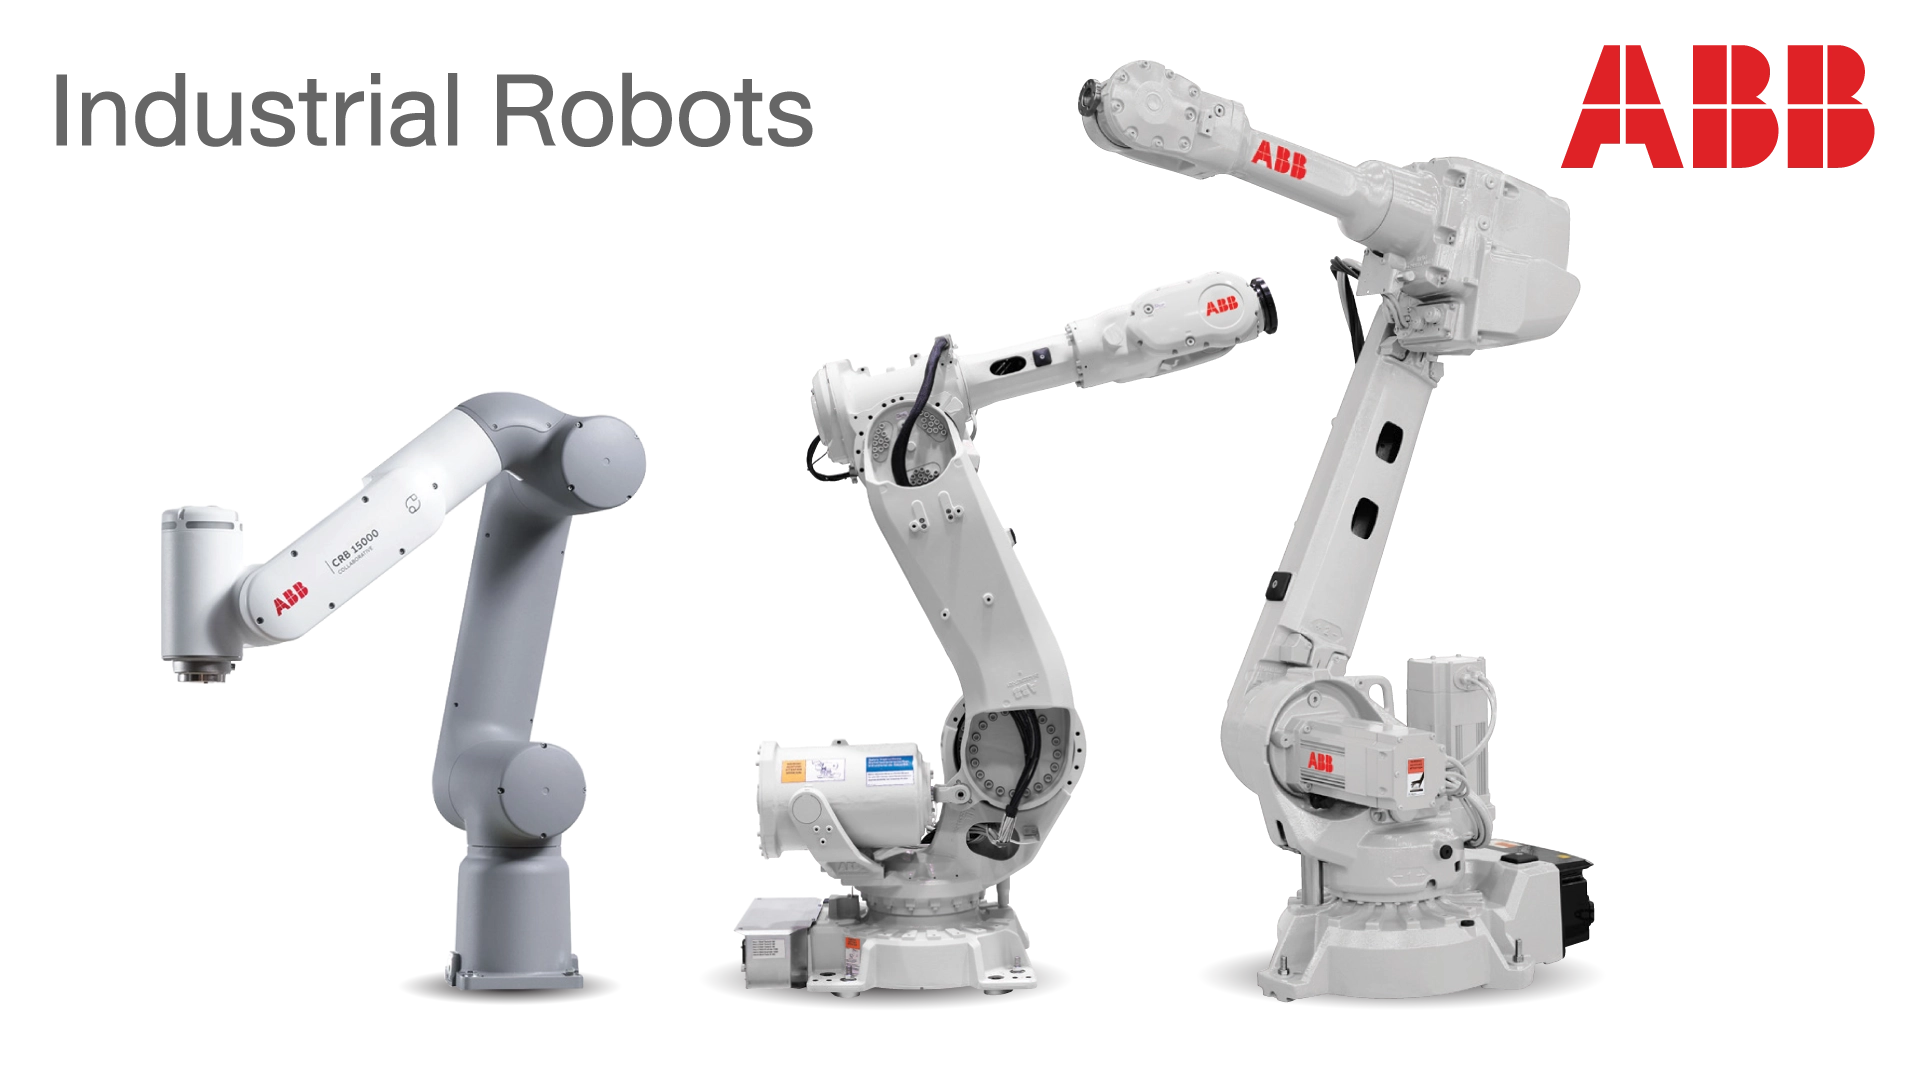 Abb Industrial Robots